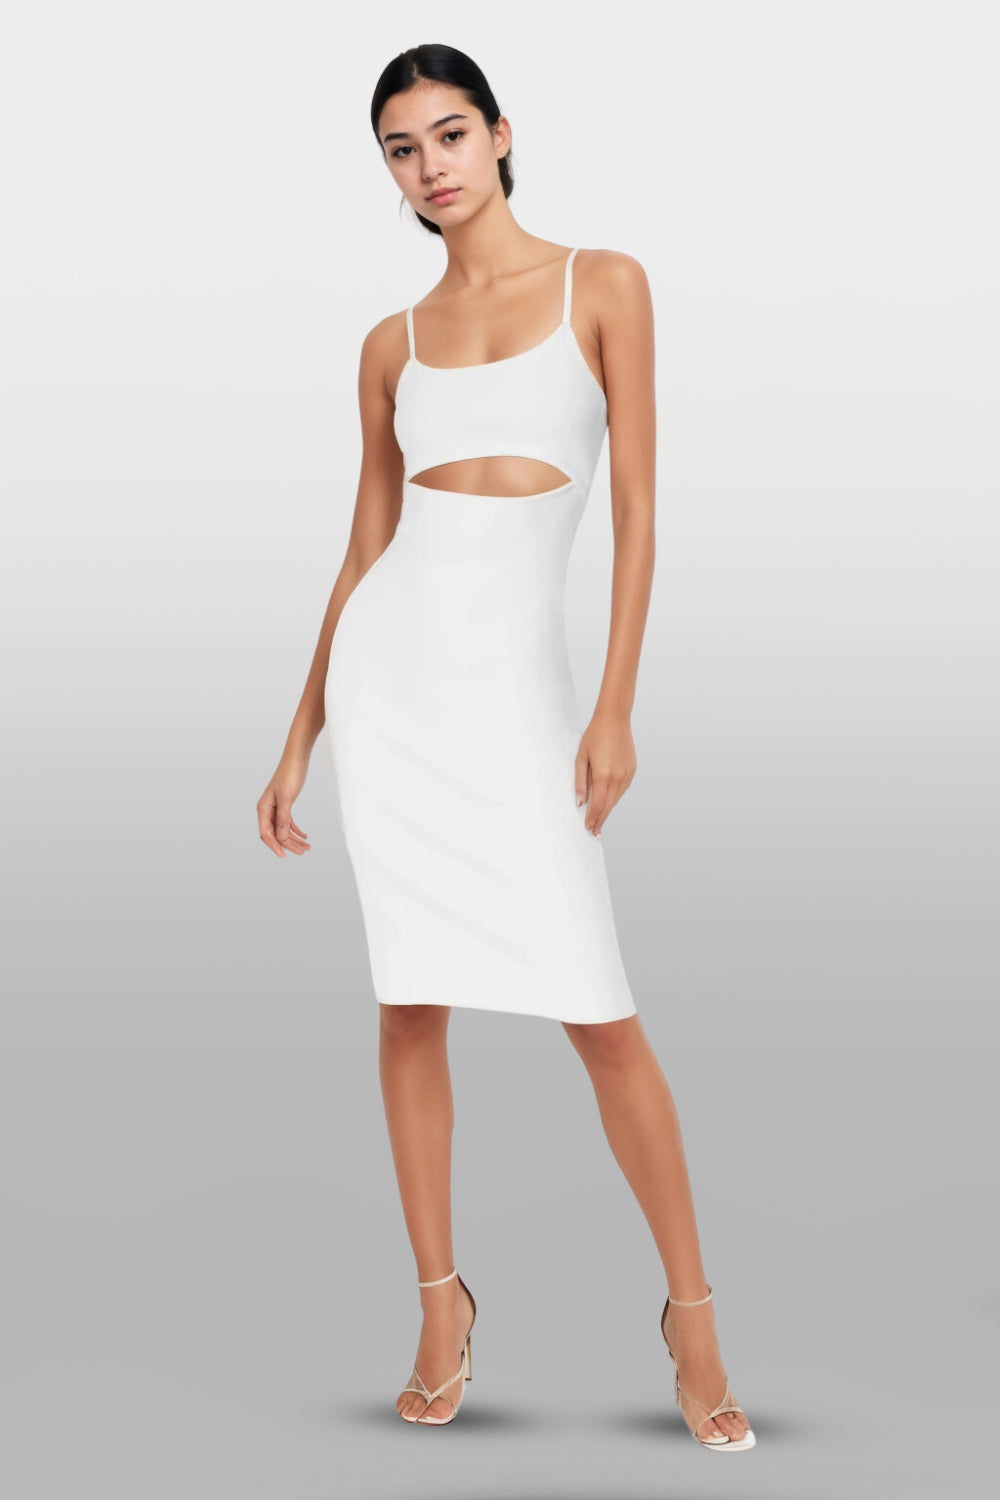 Effervescent White Dress